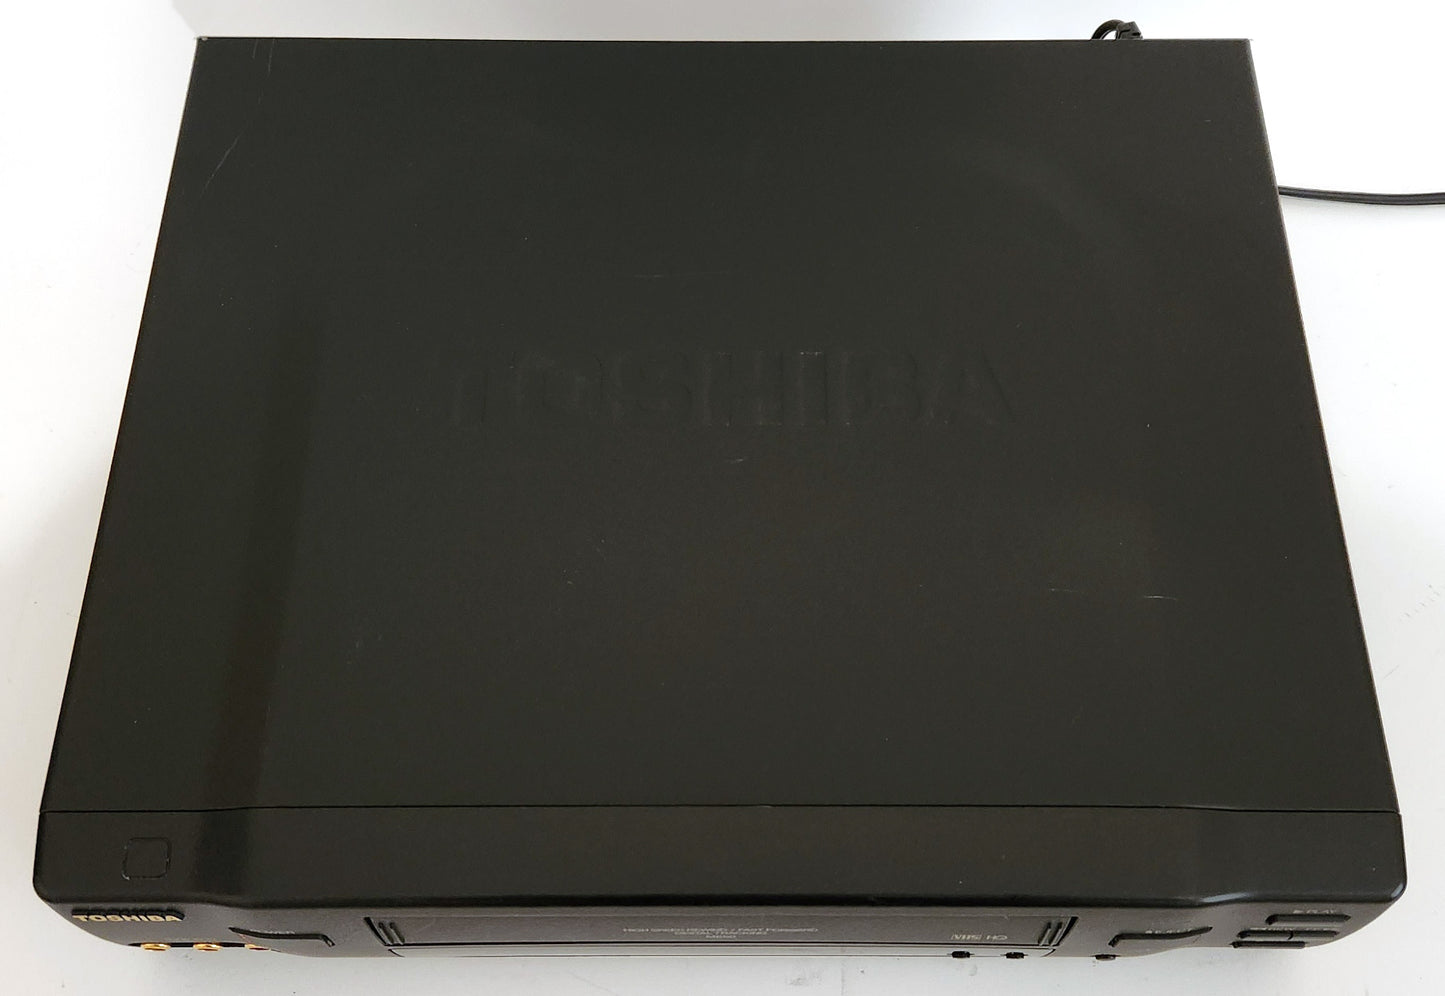 Toshiba M-650 VCR, 4-Head Hi-Fi Stereo - Top